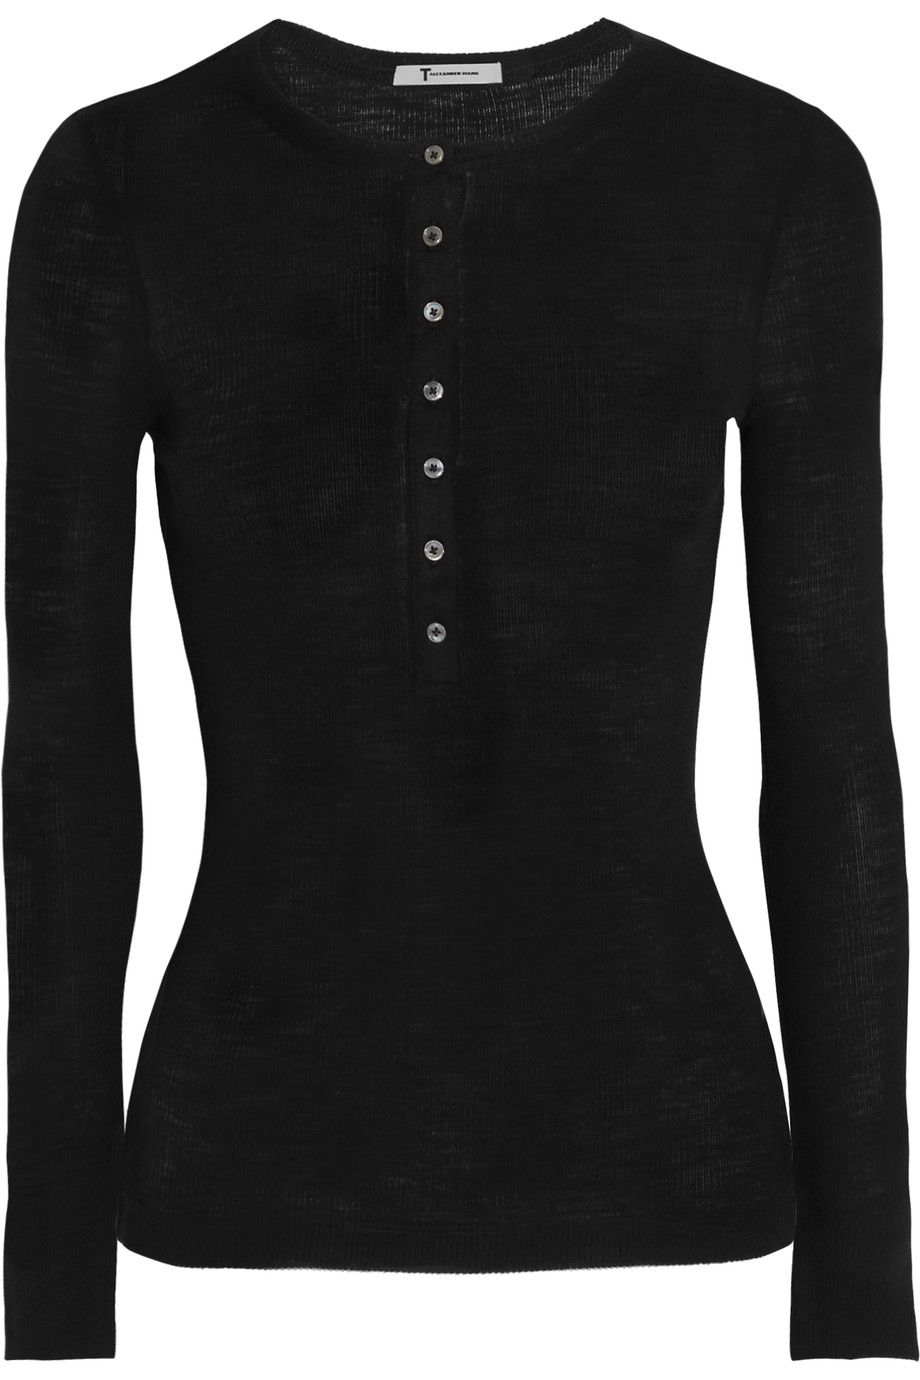 Sleeve, Pattern, Neck, Black, Fashion design, Active shirt, Pattern, Button, 